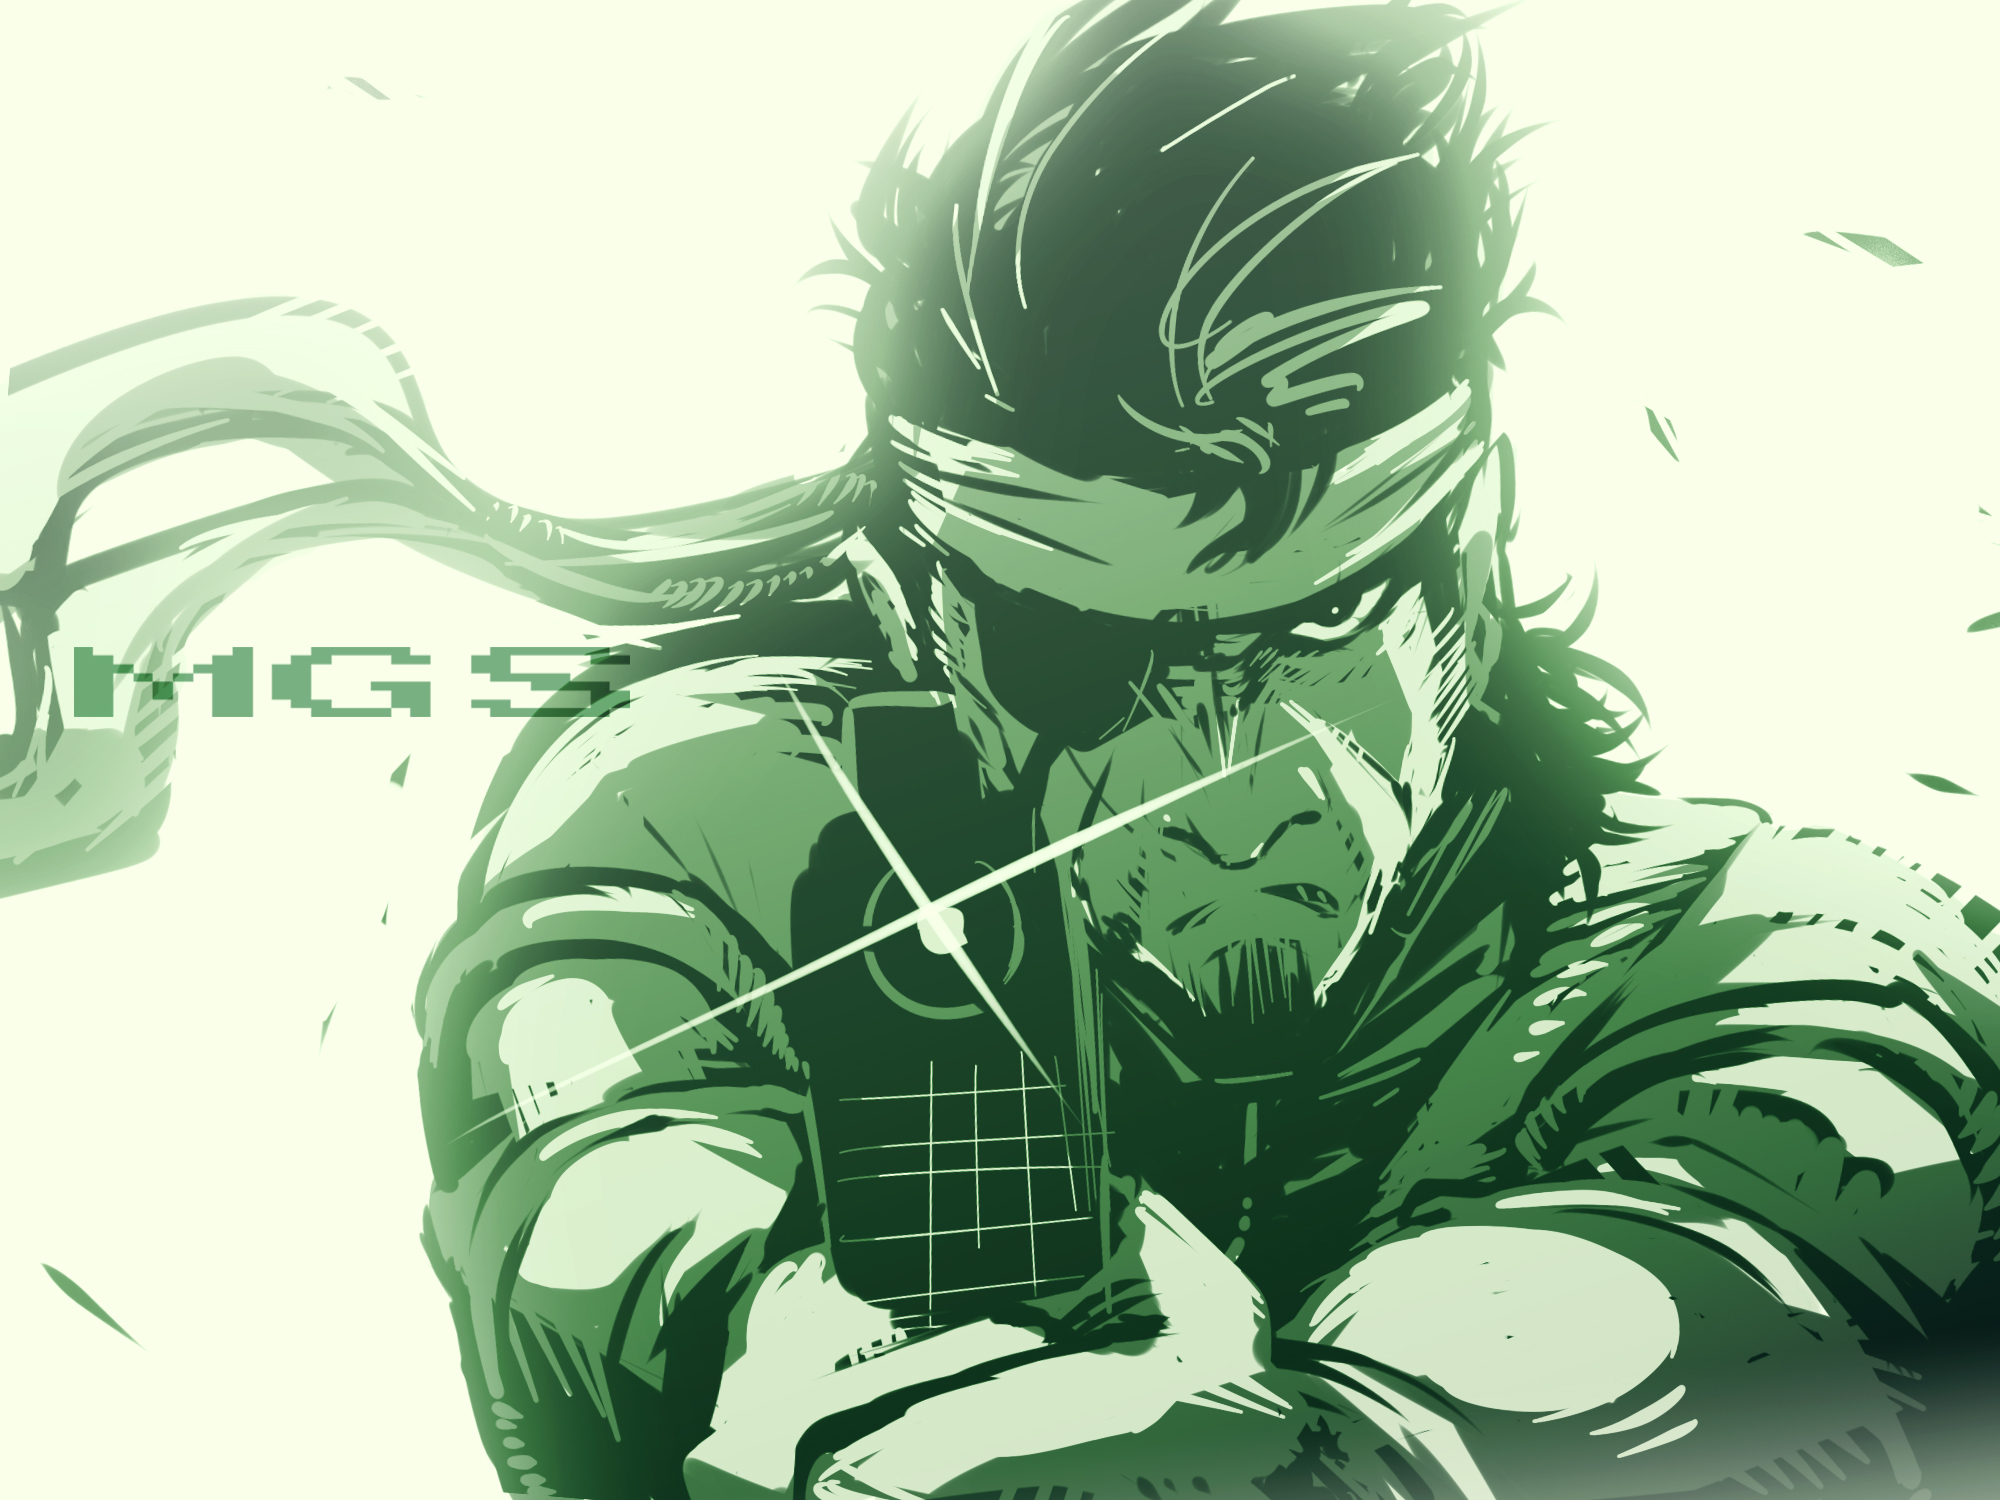 Wallpaper  anime Metal Gear Solid Metal Gear Solid Snake screenshot  3840x2160 px 3840x2160  goodfon  527884  HD Wallpapers  WallHere